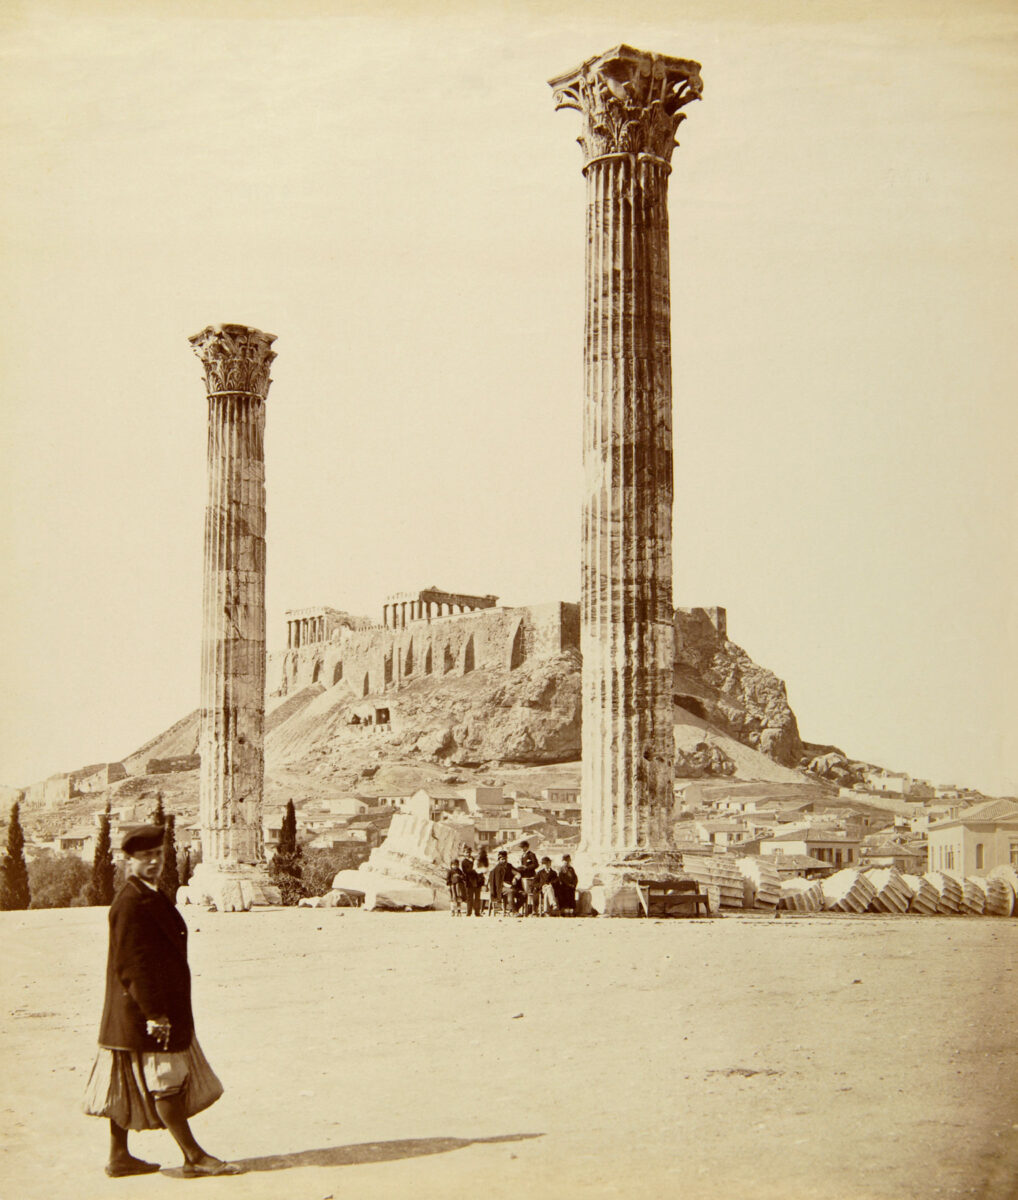 Pascal Sébah (1823-1886) (αποδίδεται), «Ο ναός του Ολυμπίου Διός με την Ακρόπολη στο βάθος», 1872-1874, αλμπουμίνη, 30,2×25,9 εκ. Μουσείο Μπενάκη ΦΑ7.φάκ.3π.440, Νεοελληνική Ιστορική Συλλογή Κωνσταντίνου Τρίπου.